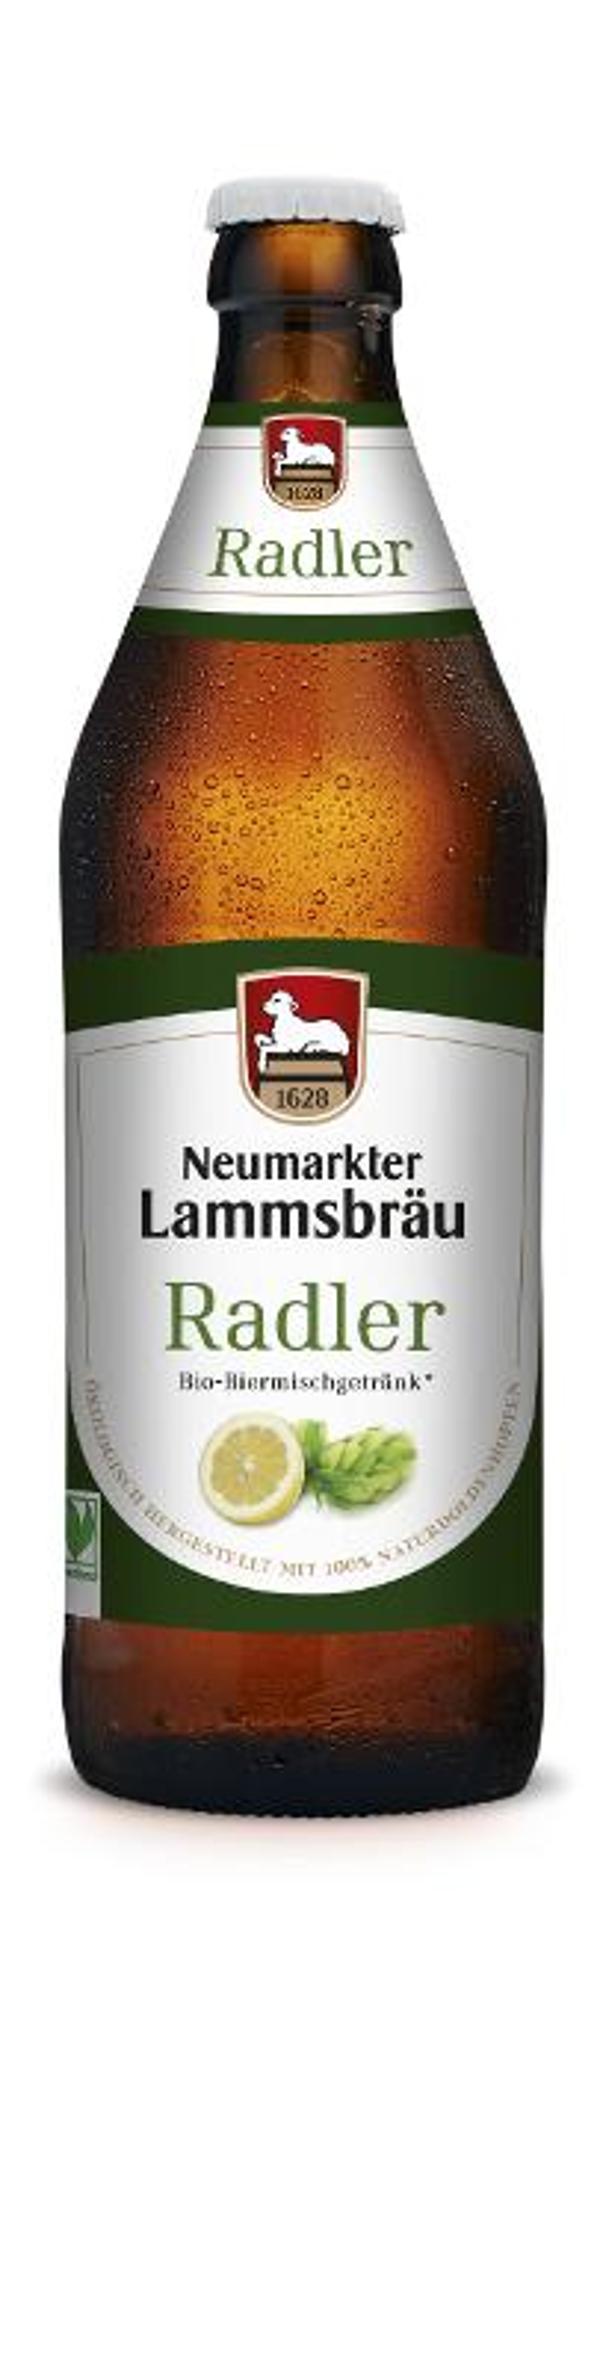 Produktfoto zu Lammsbräu Radler 0,5 l